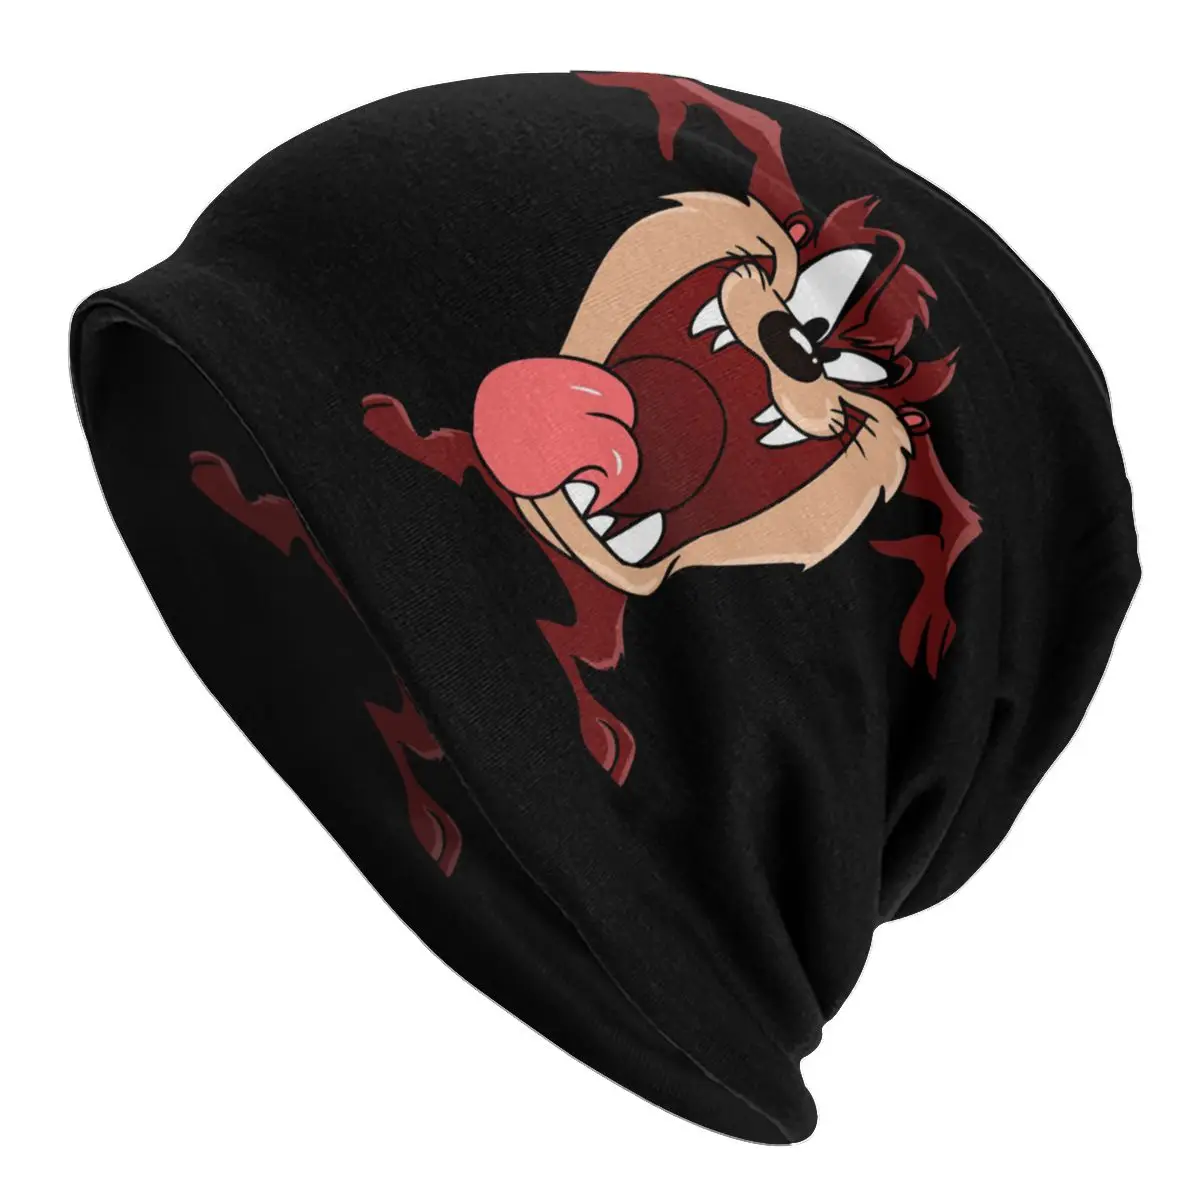 

Tasmanian Devil Bonnet Beanie Knit Hats Men Women Fashion Unisex Taz Cartoon Anime Winter Warm Skullies Beanies Caps 1